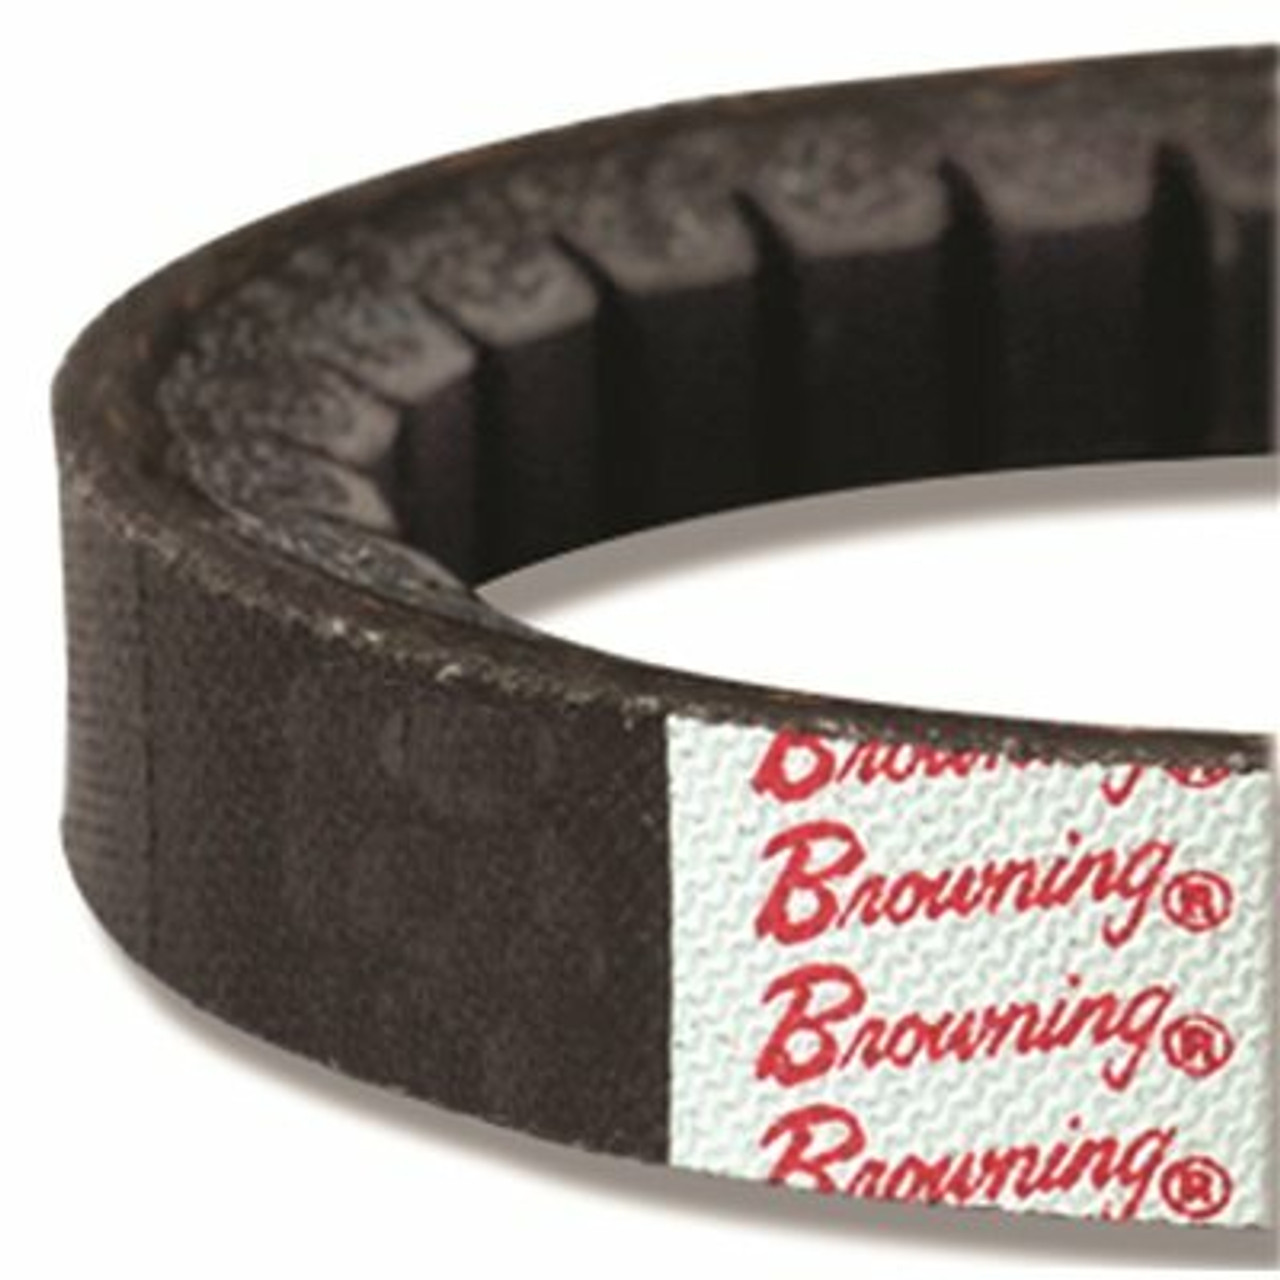 Browning Mfg. Browning V Belt, Bx64, 21/32 X 67 In.